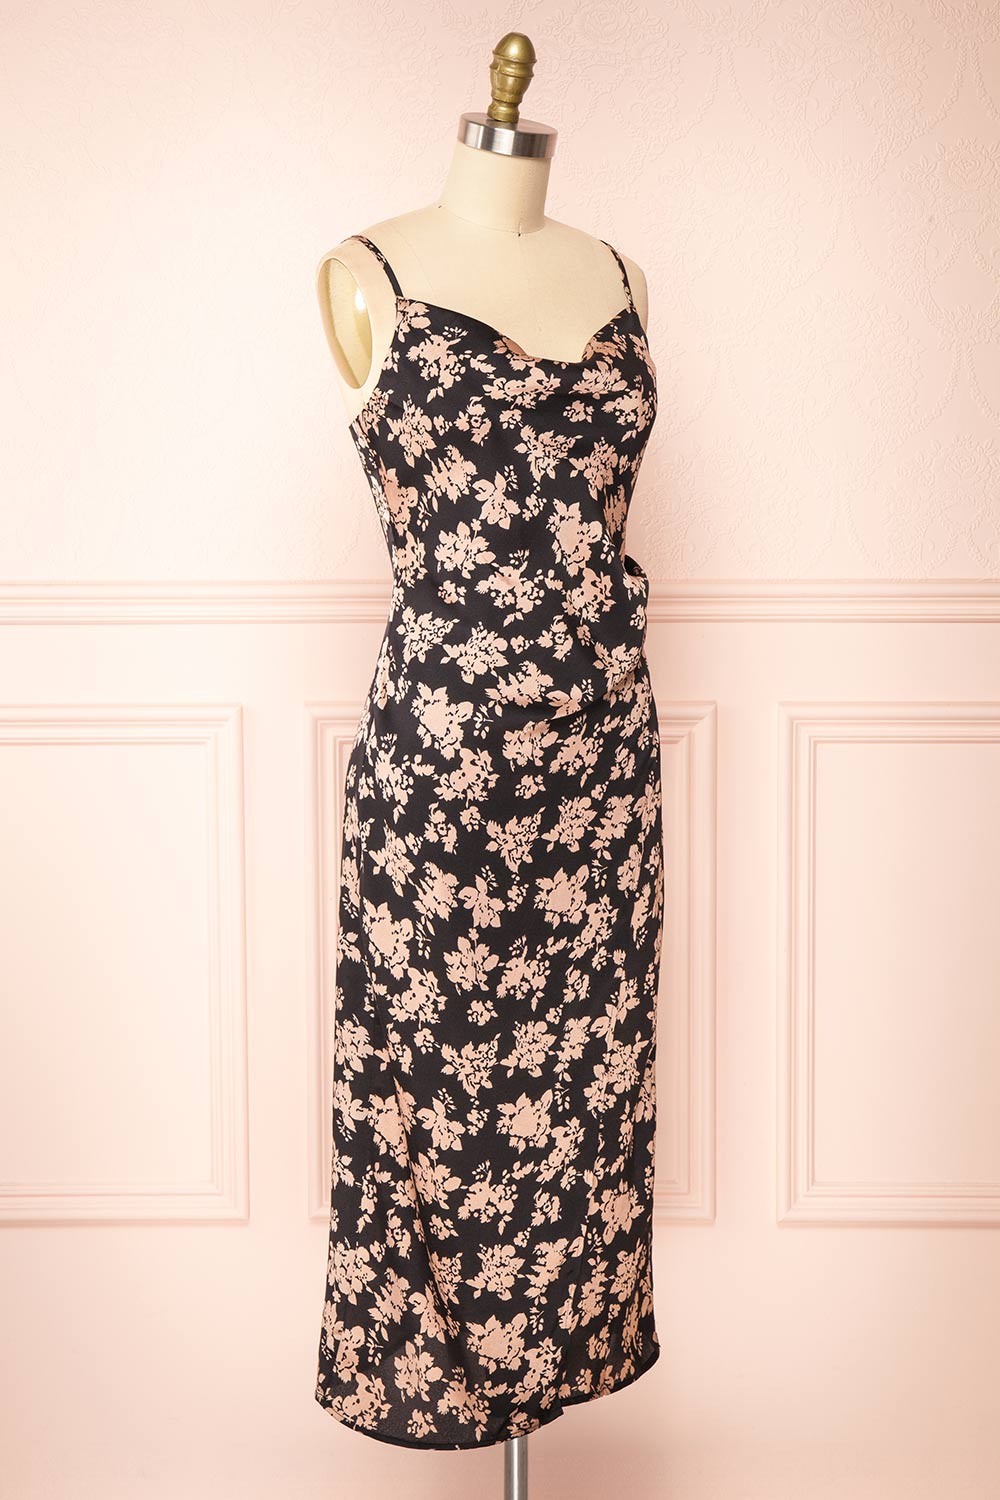 Mimallone Cowl Neck Floral Midi Dress | Boutique 1861 side view